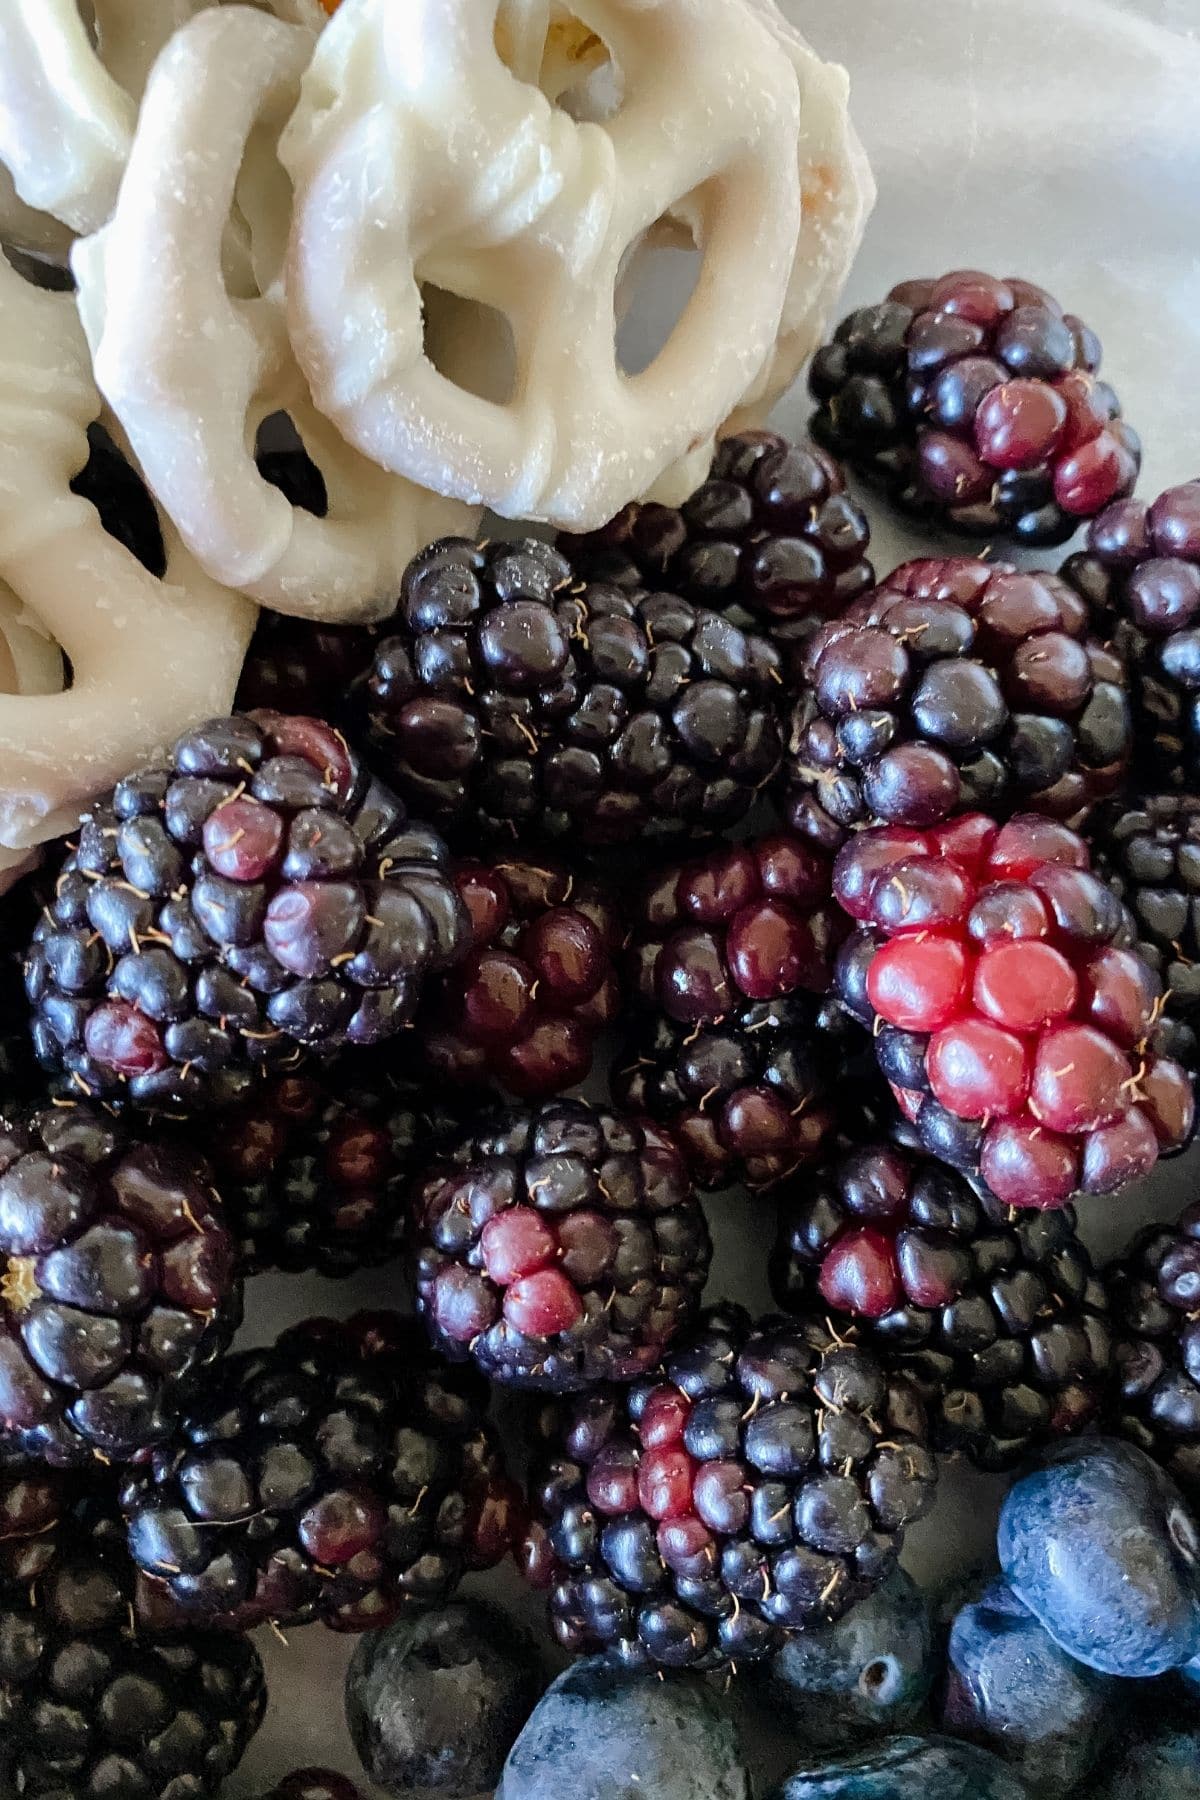 Blackberries next to white pretzels